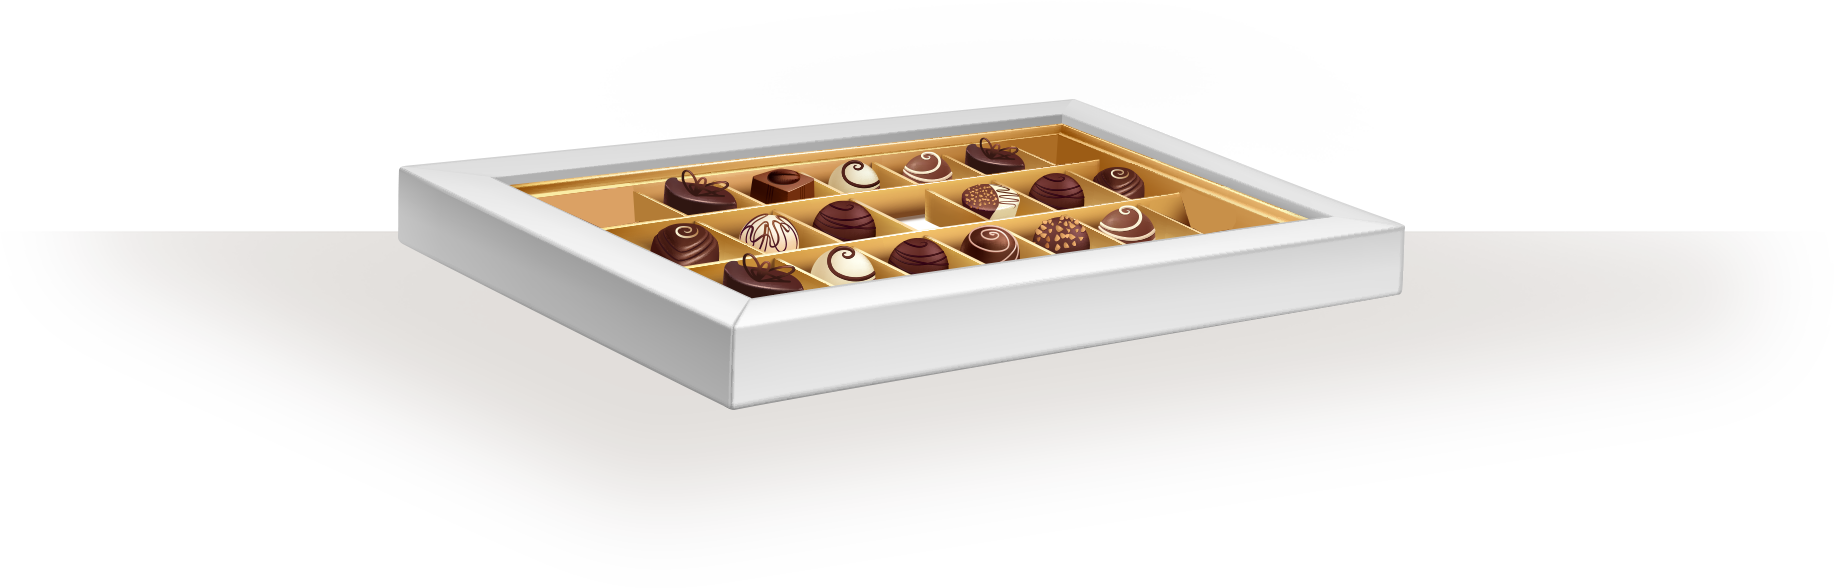 box-of-chocolate-full-final